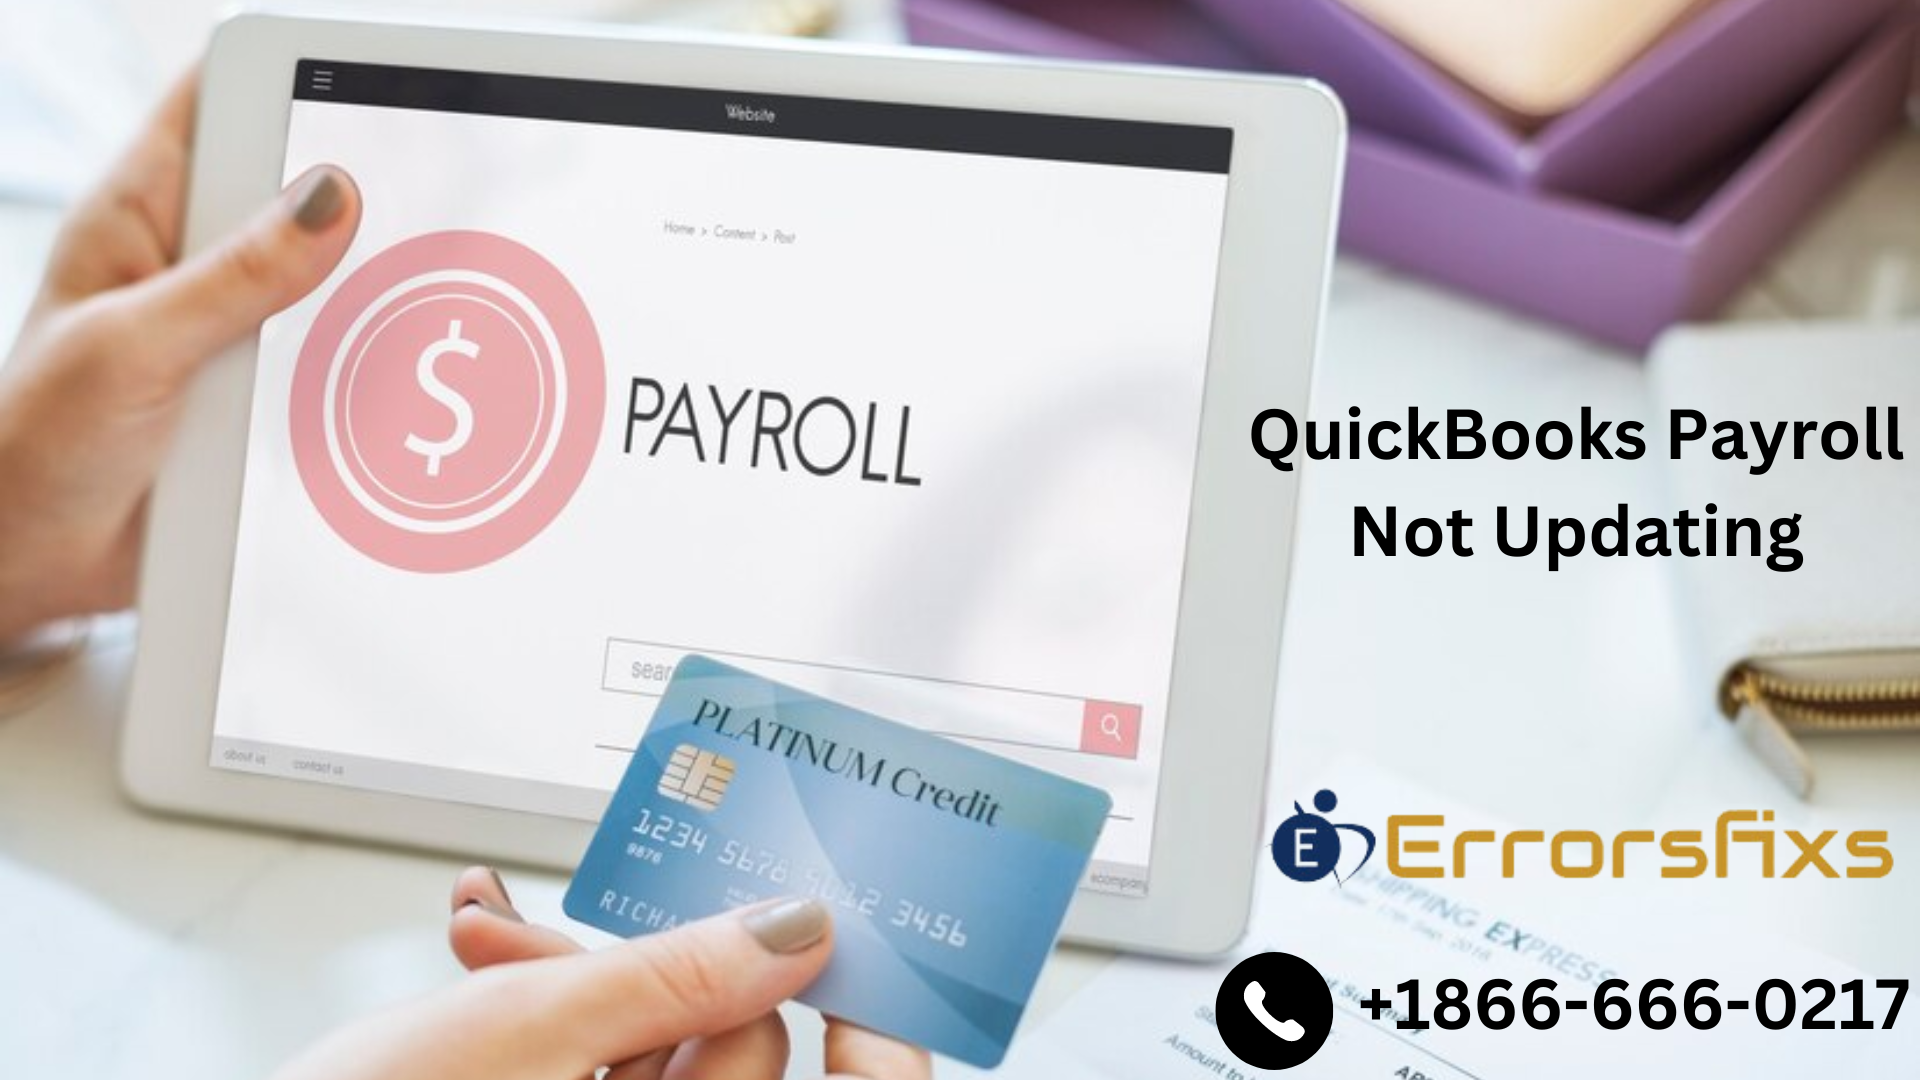 QuickBooks Payroll Not Updating